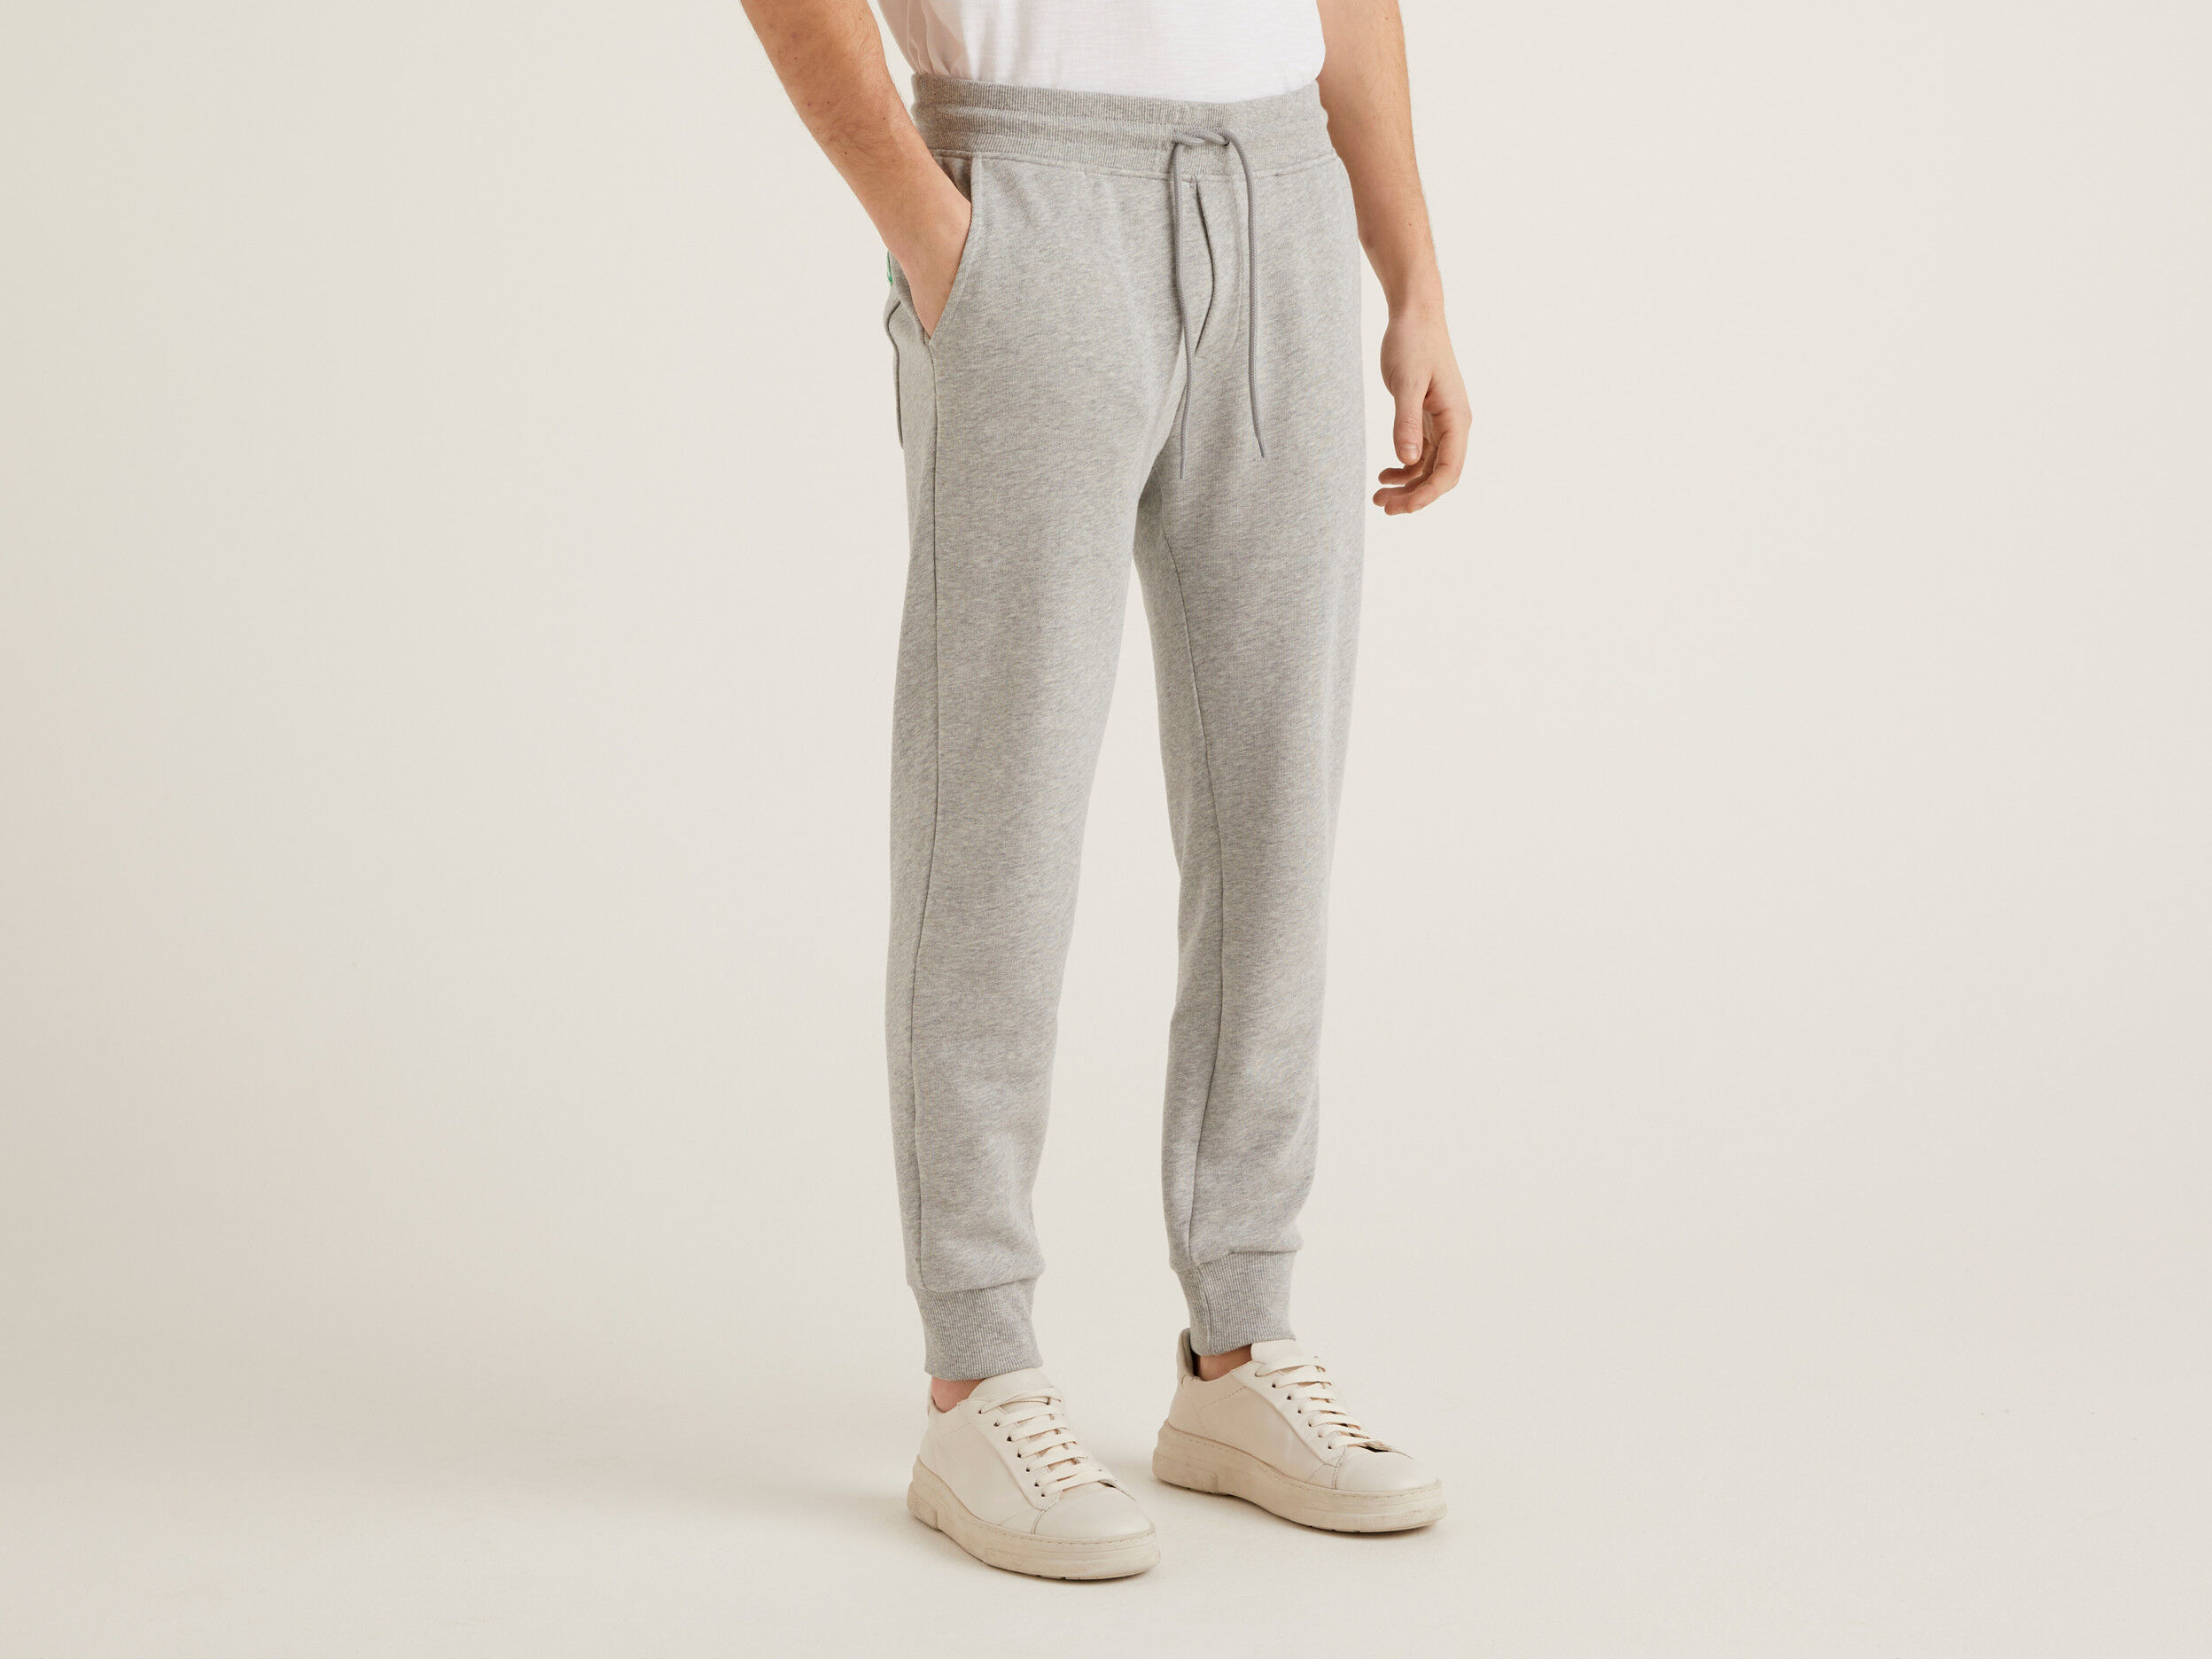 100%Cotton Unisex Track Suits, Sweatshirt and Pants Suit – ALL NATURALS